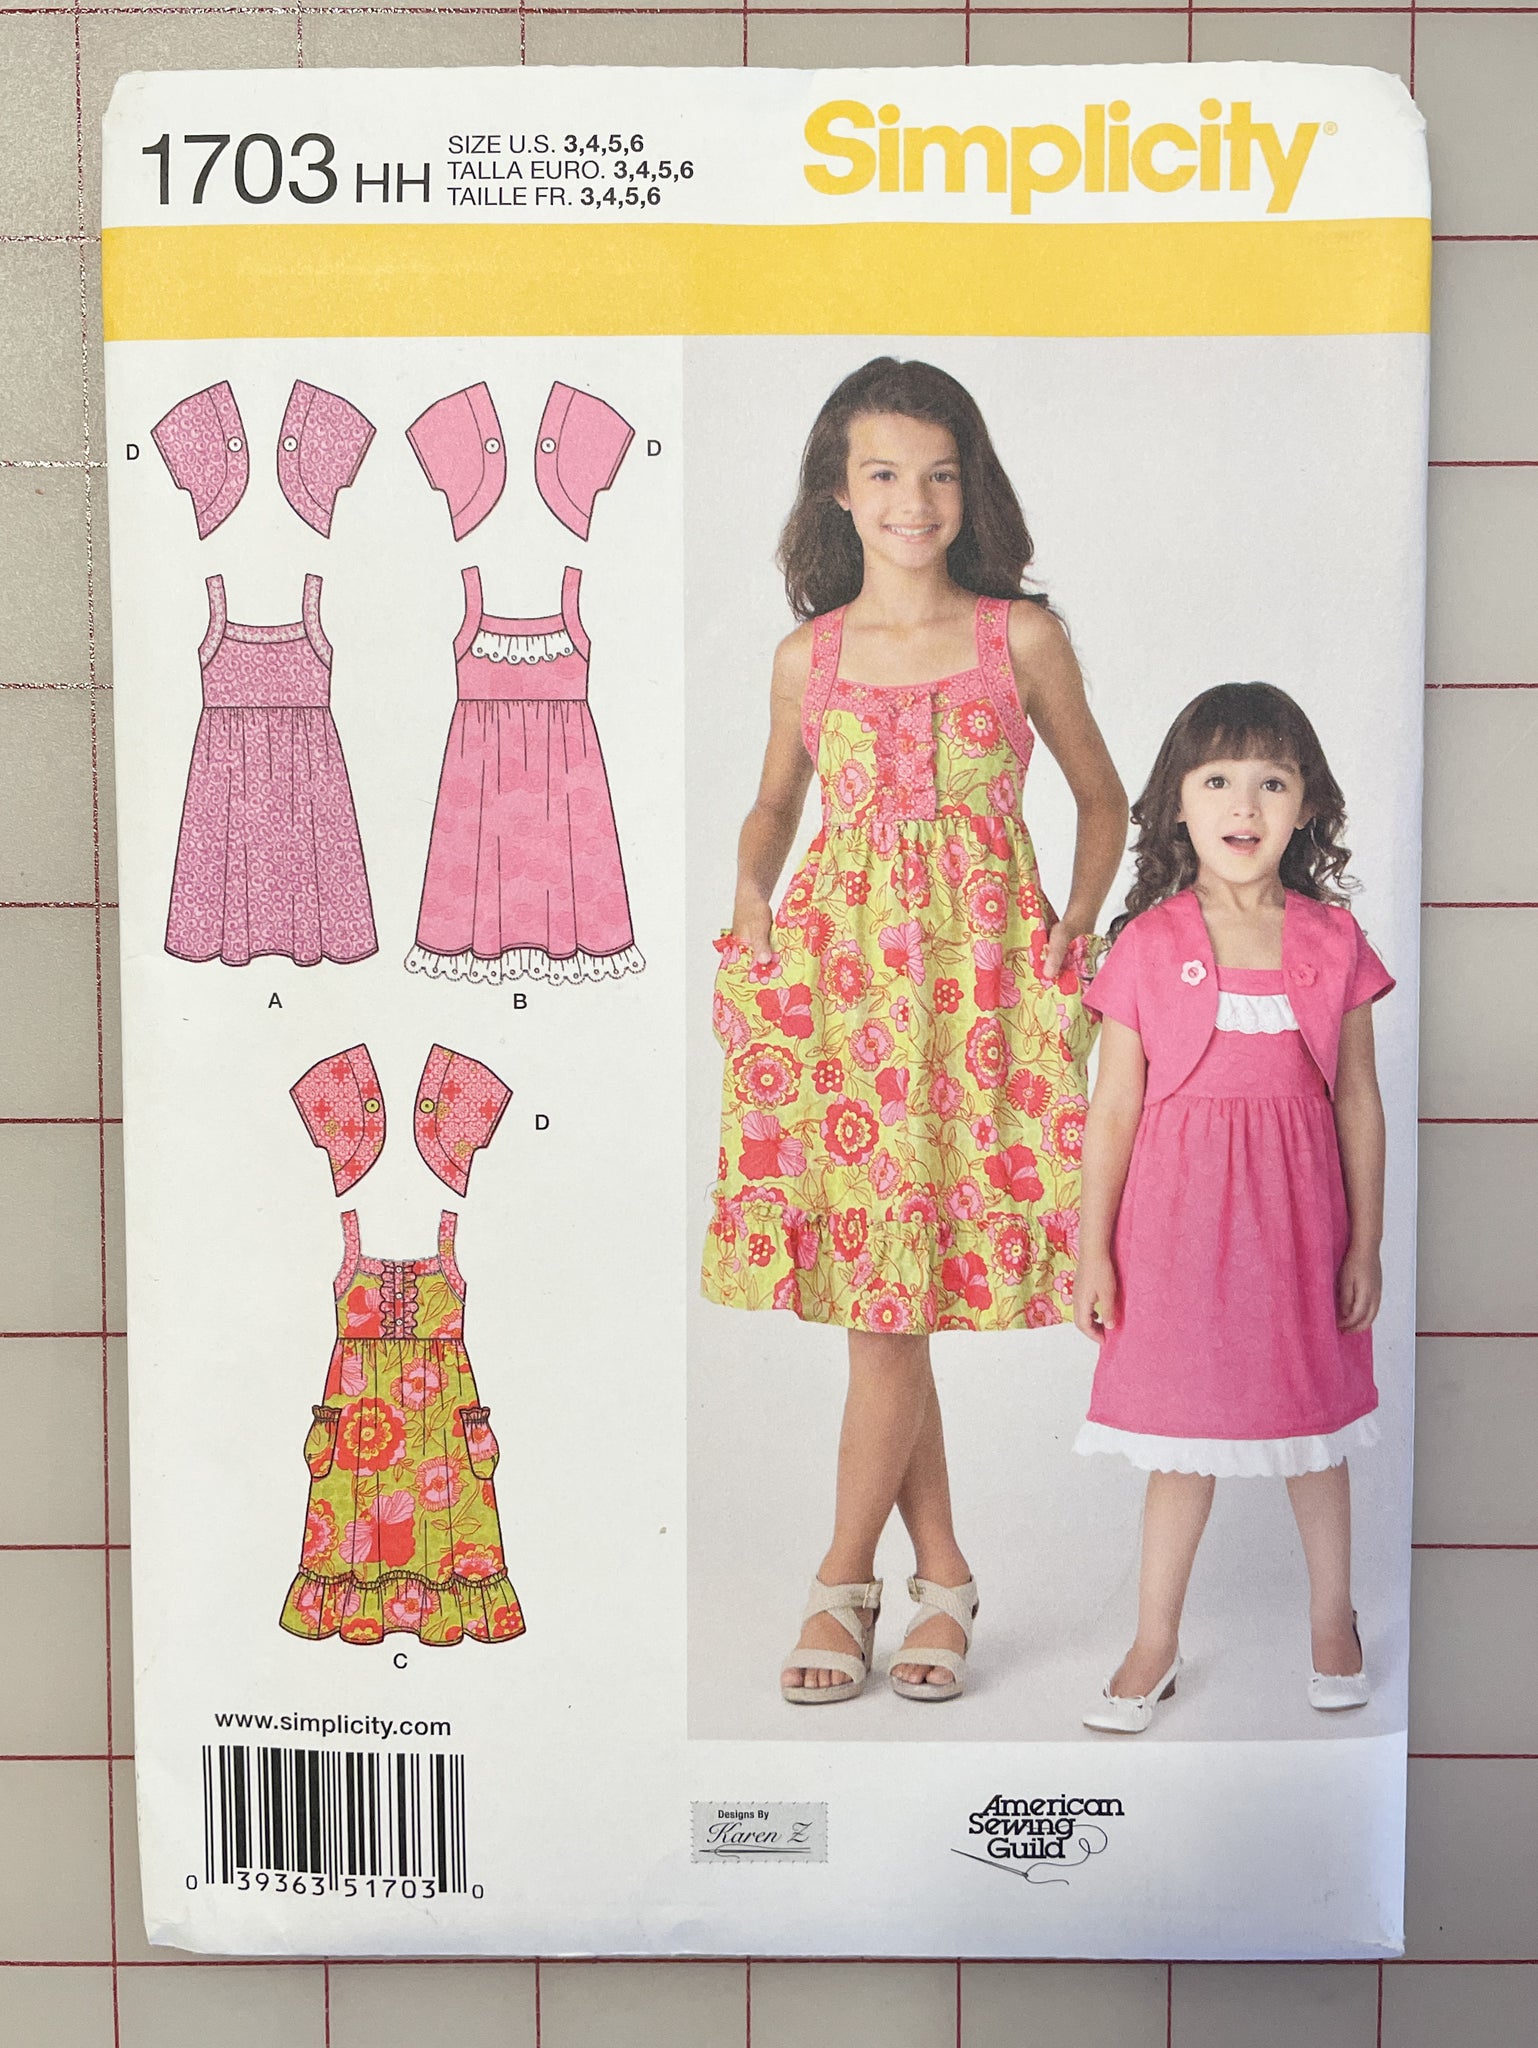 SALE 2013 Simplicity 1703 Pattern - Girl’s Dress and Bolero FACTORY FOLDED